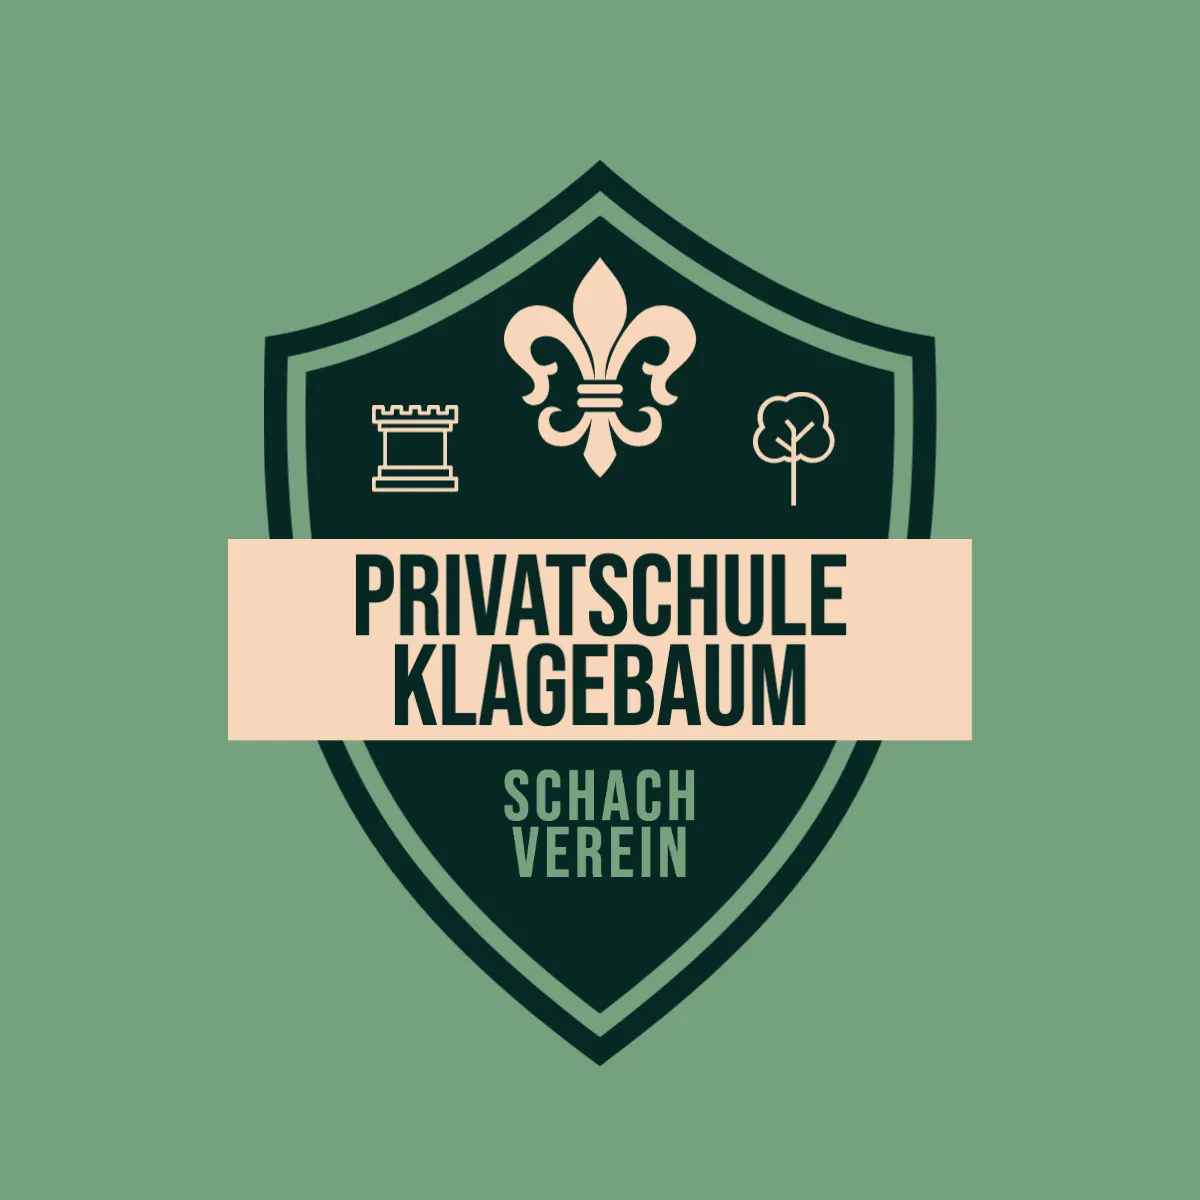 Green and Beige School Emblem Chess Team Logo